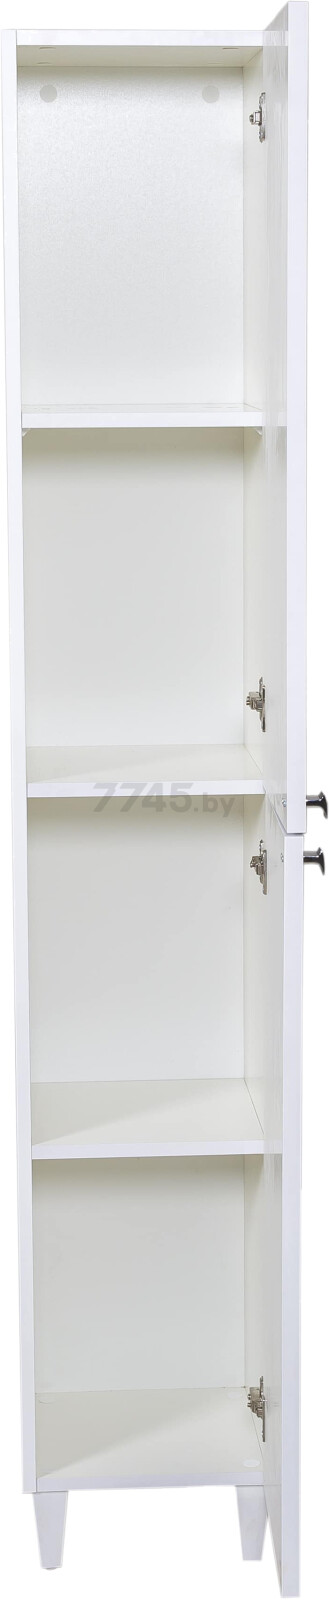 Шкаф-пенал для ванной АКВА РОДОС Вудмикс (АР0002608) - Фото 3